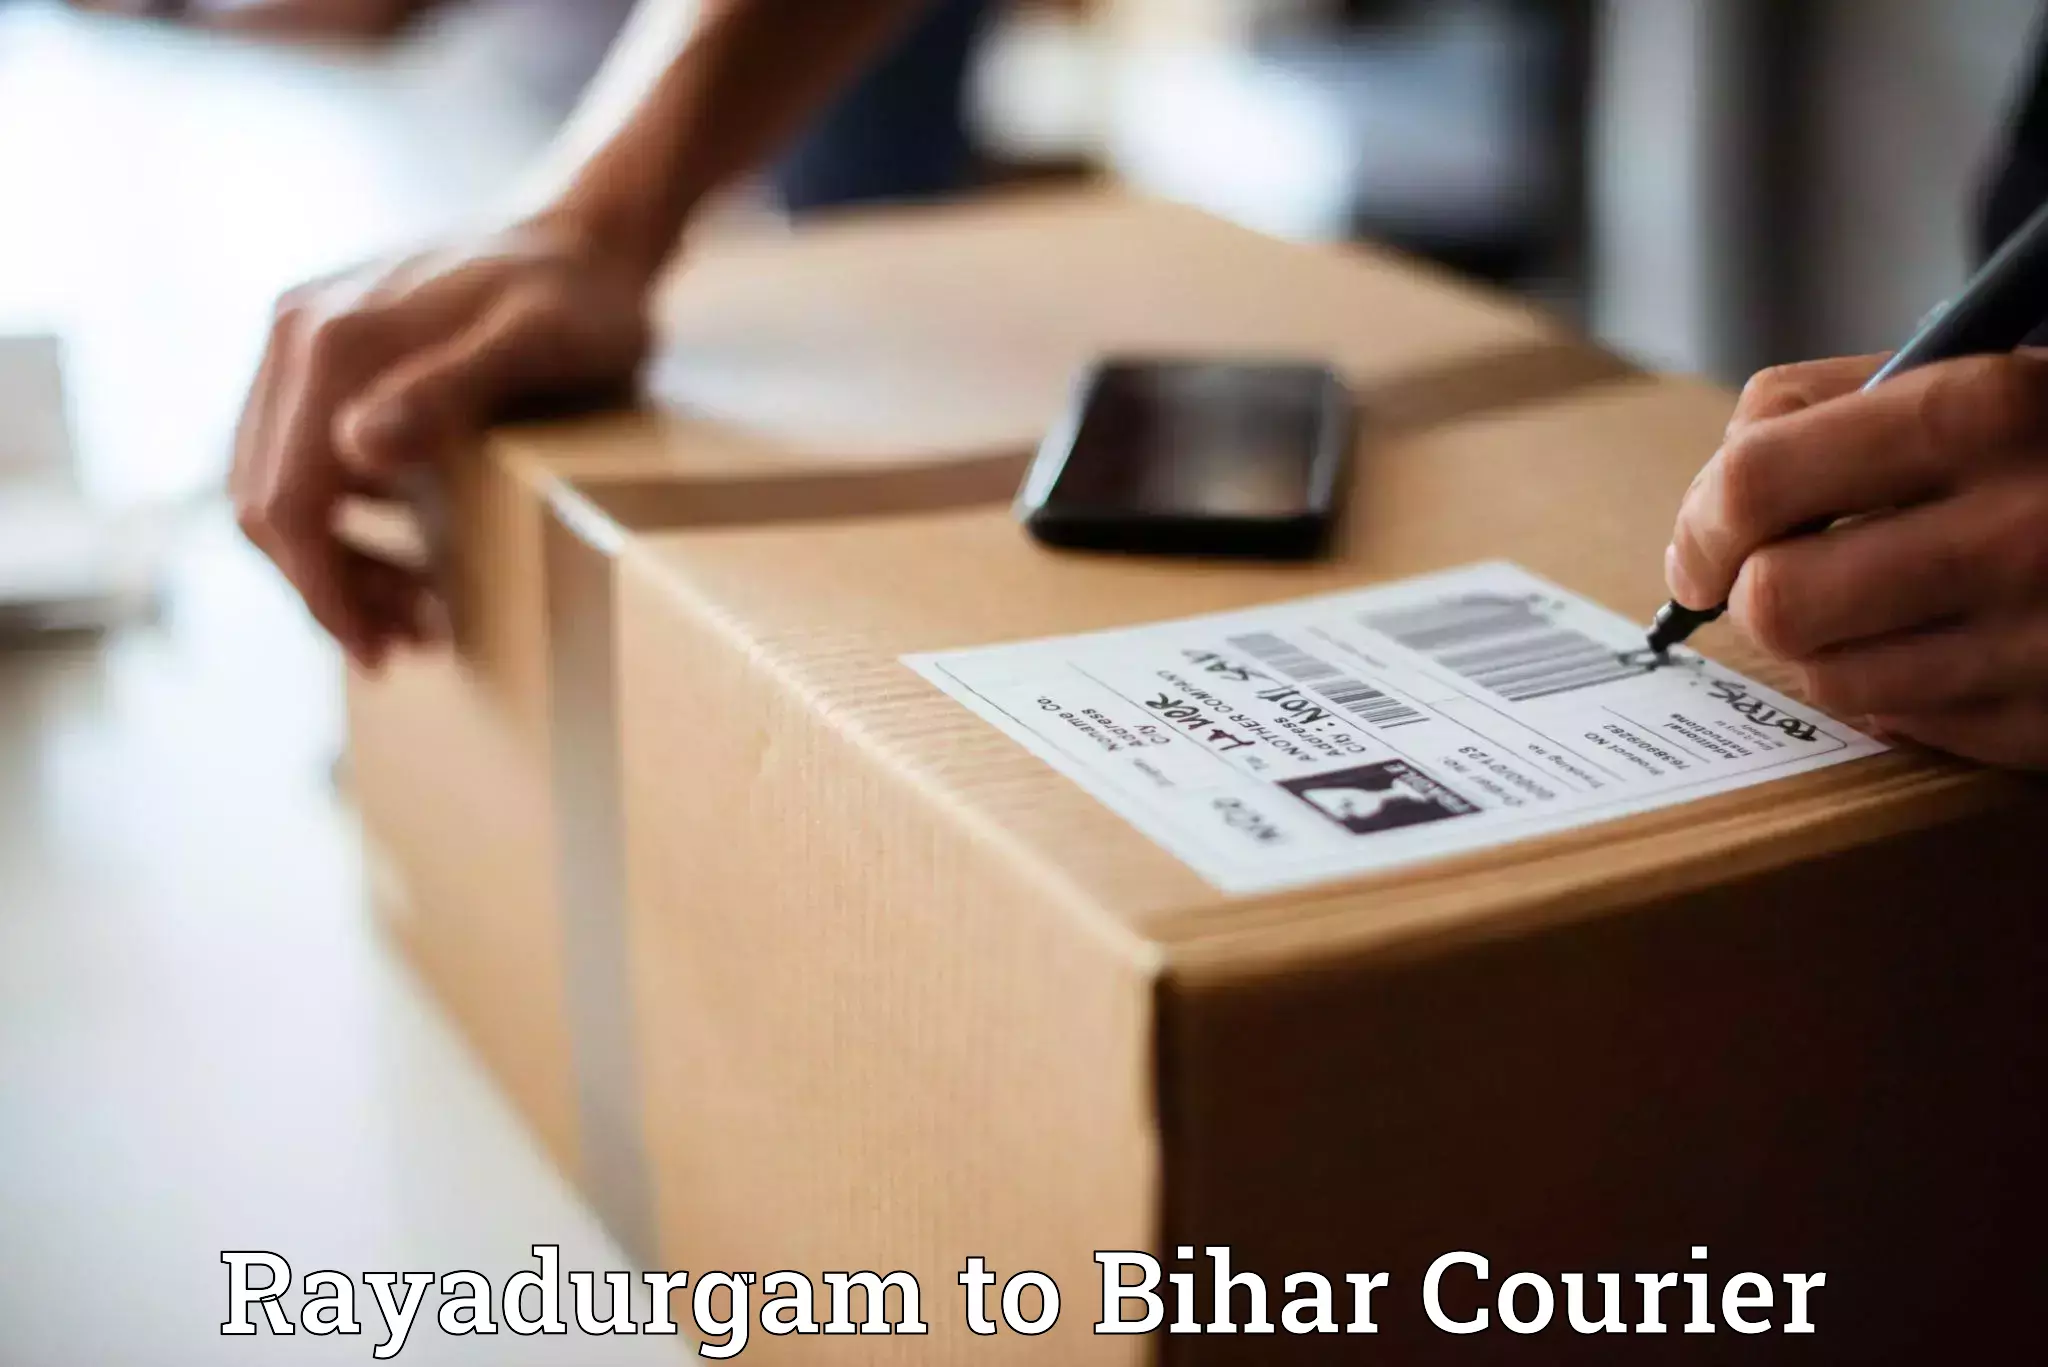 Professional courier handling in Rayadurgam to Madhubani